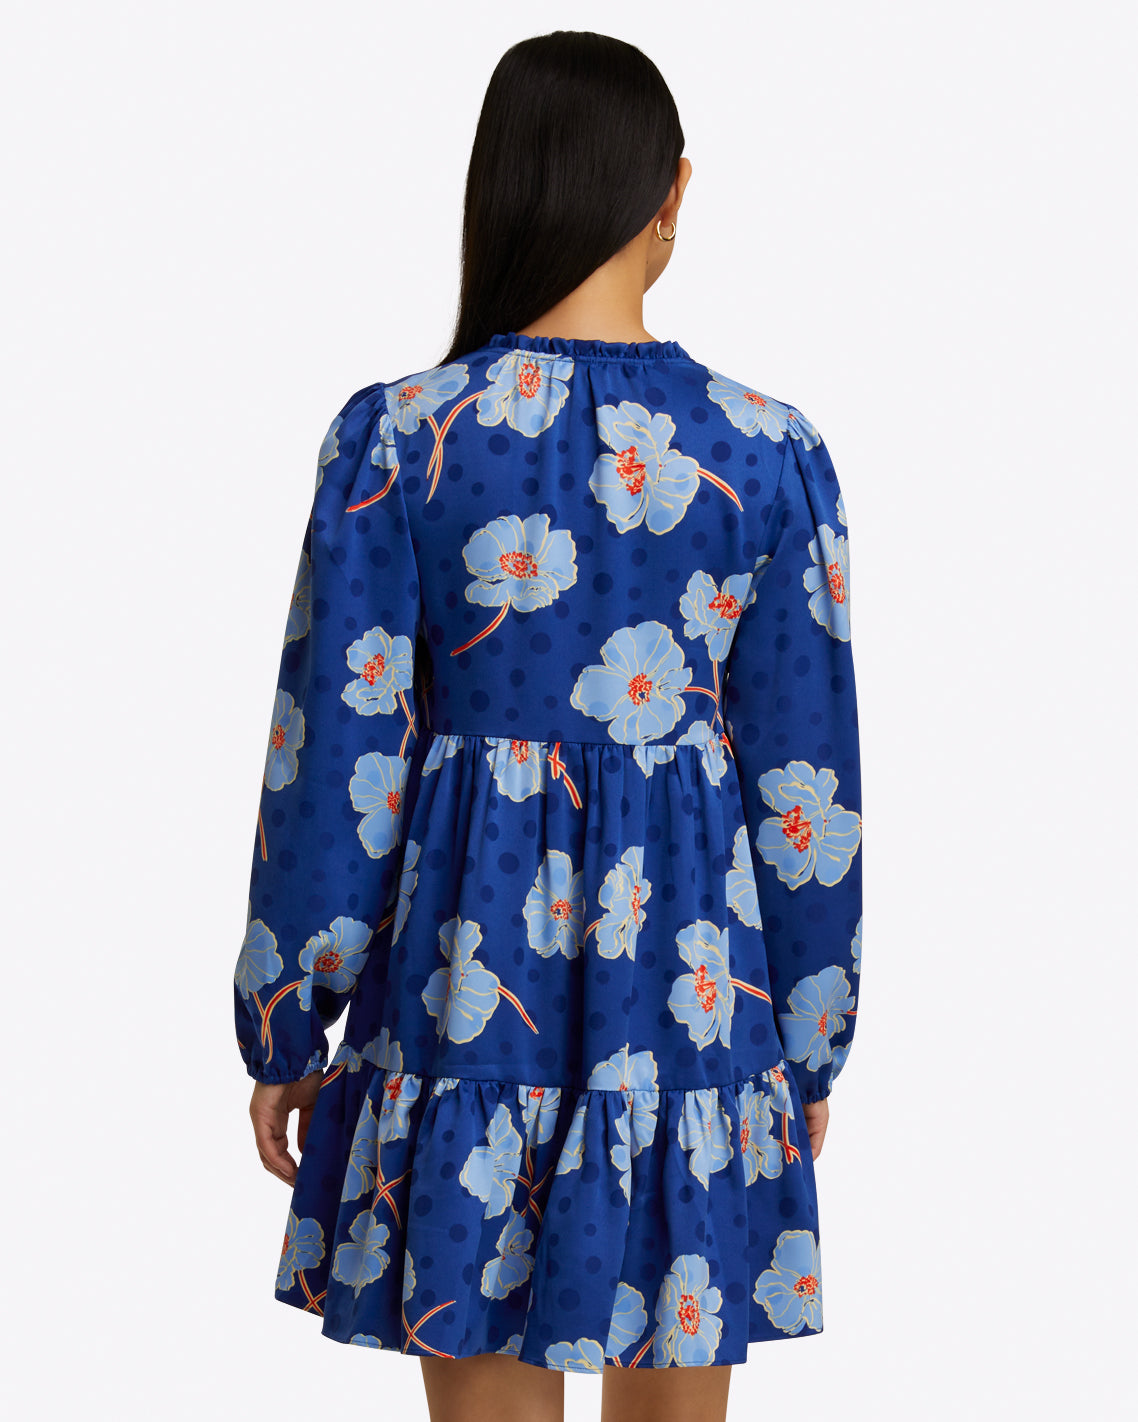 Connie Long Sleeve Mini Dress in Printed Dot Jacquard